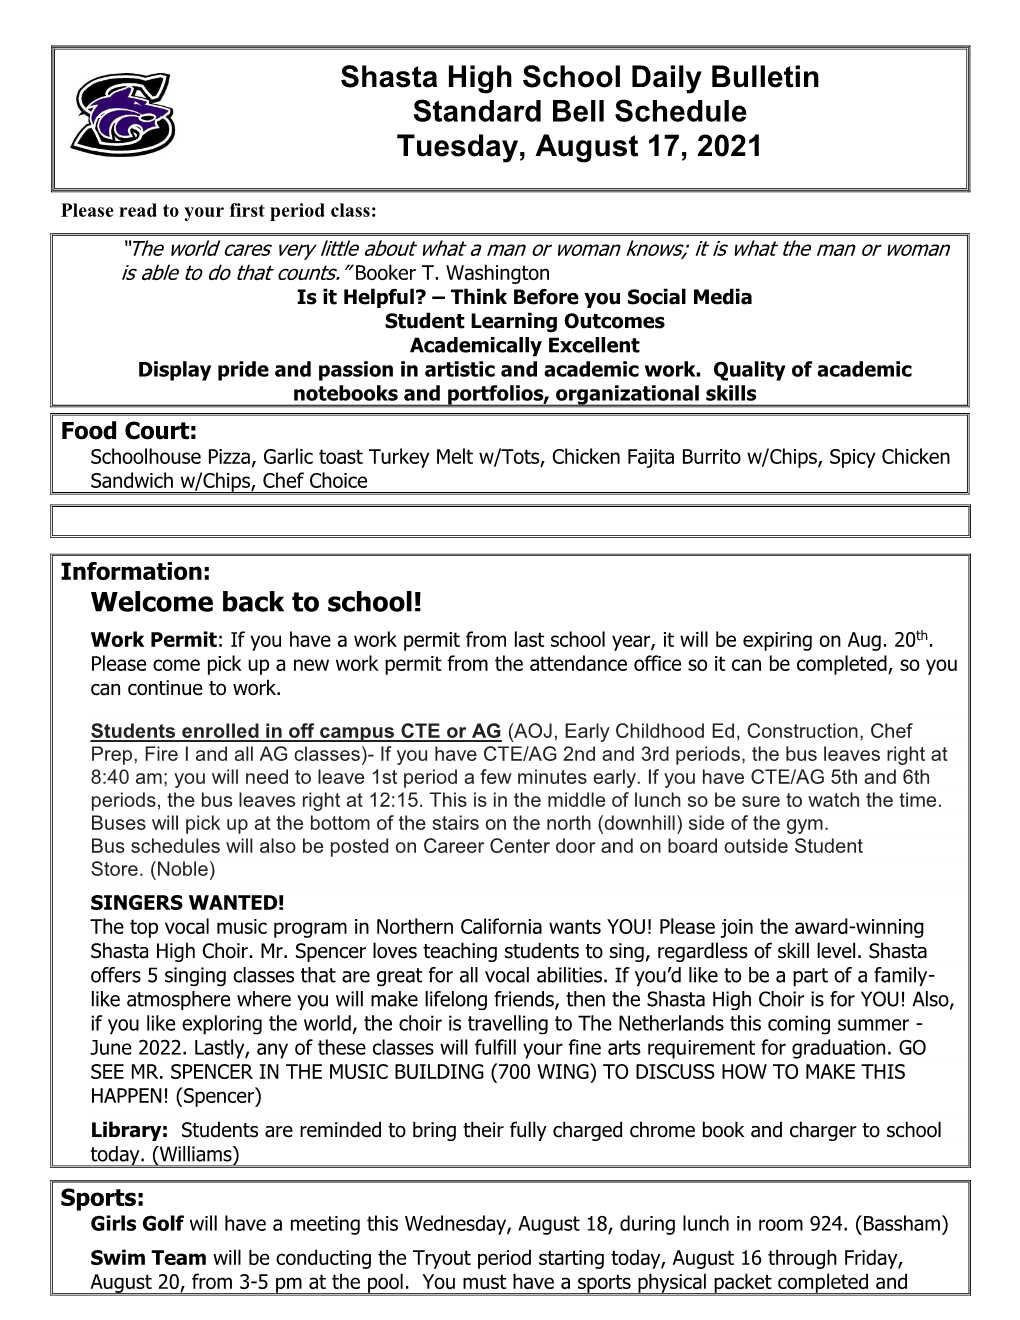 Shasta High School Daily Bulletin Standard Bell Schedule Tuesday, August 17, 2021